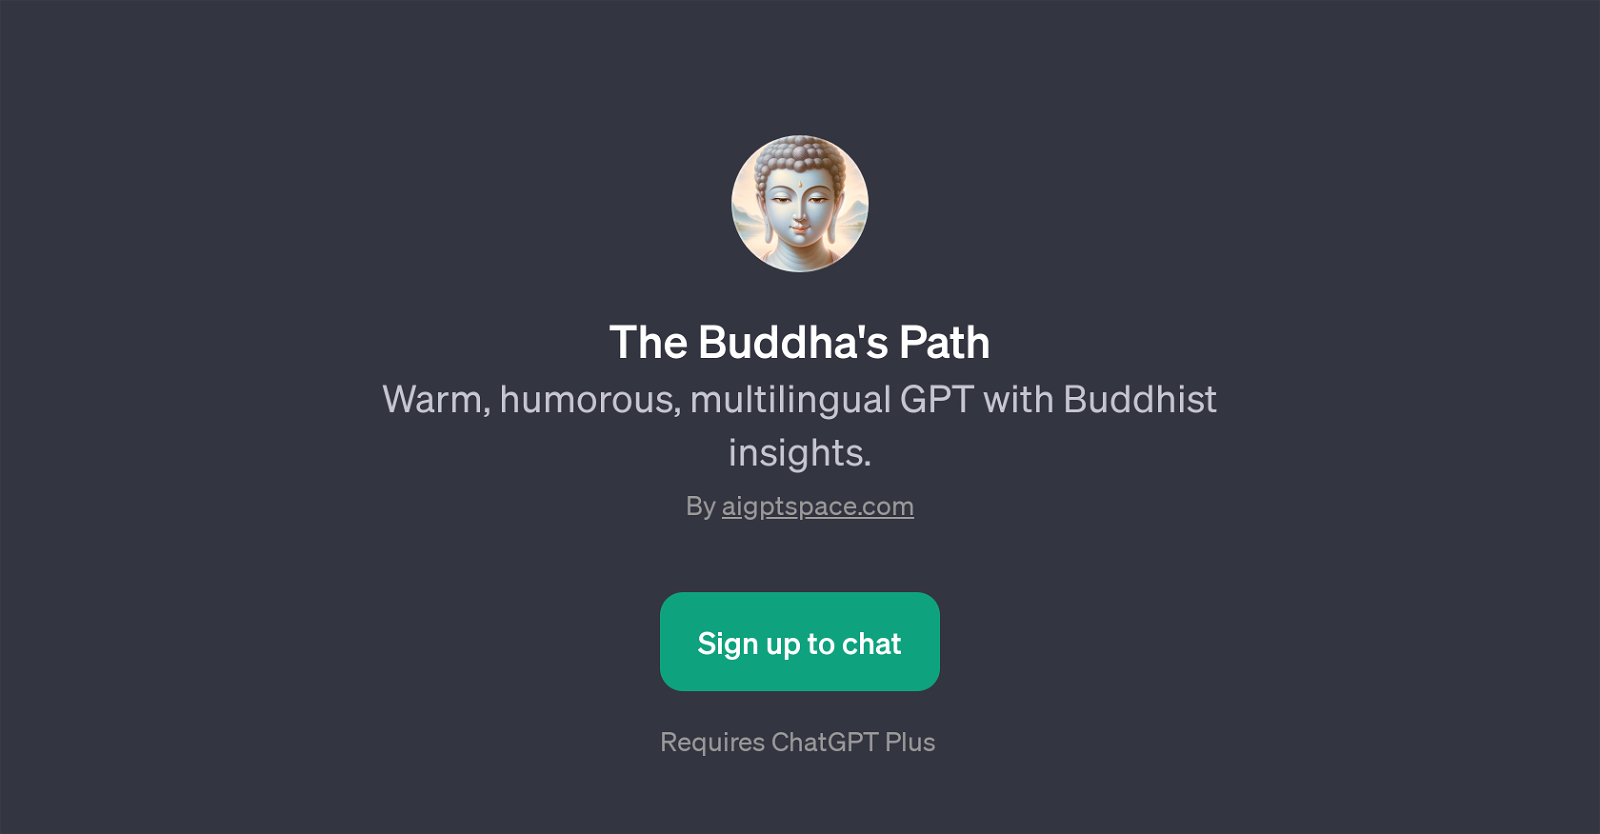 The Buddha's Path website